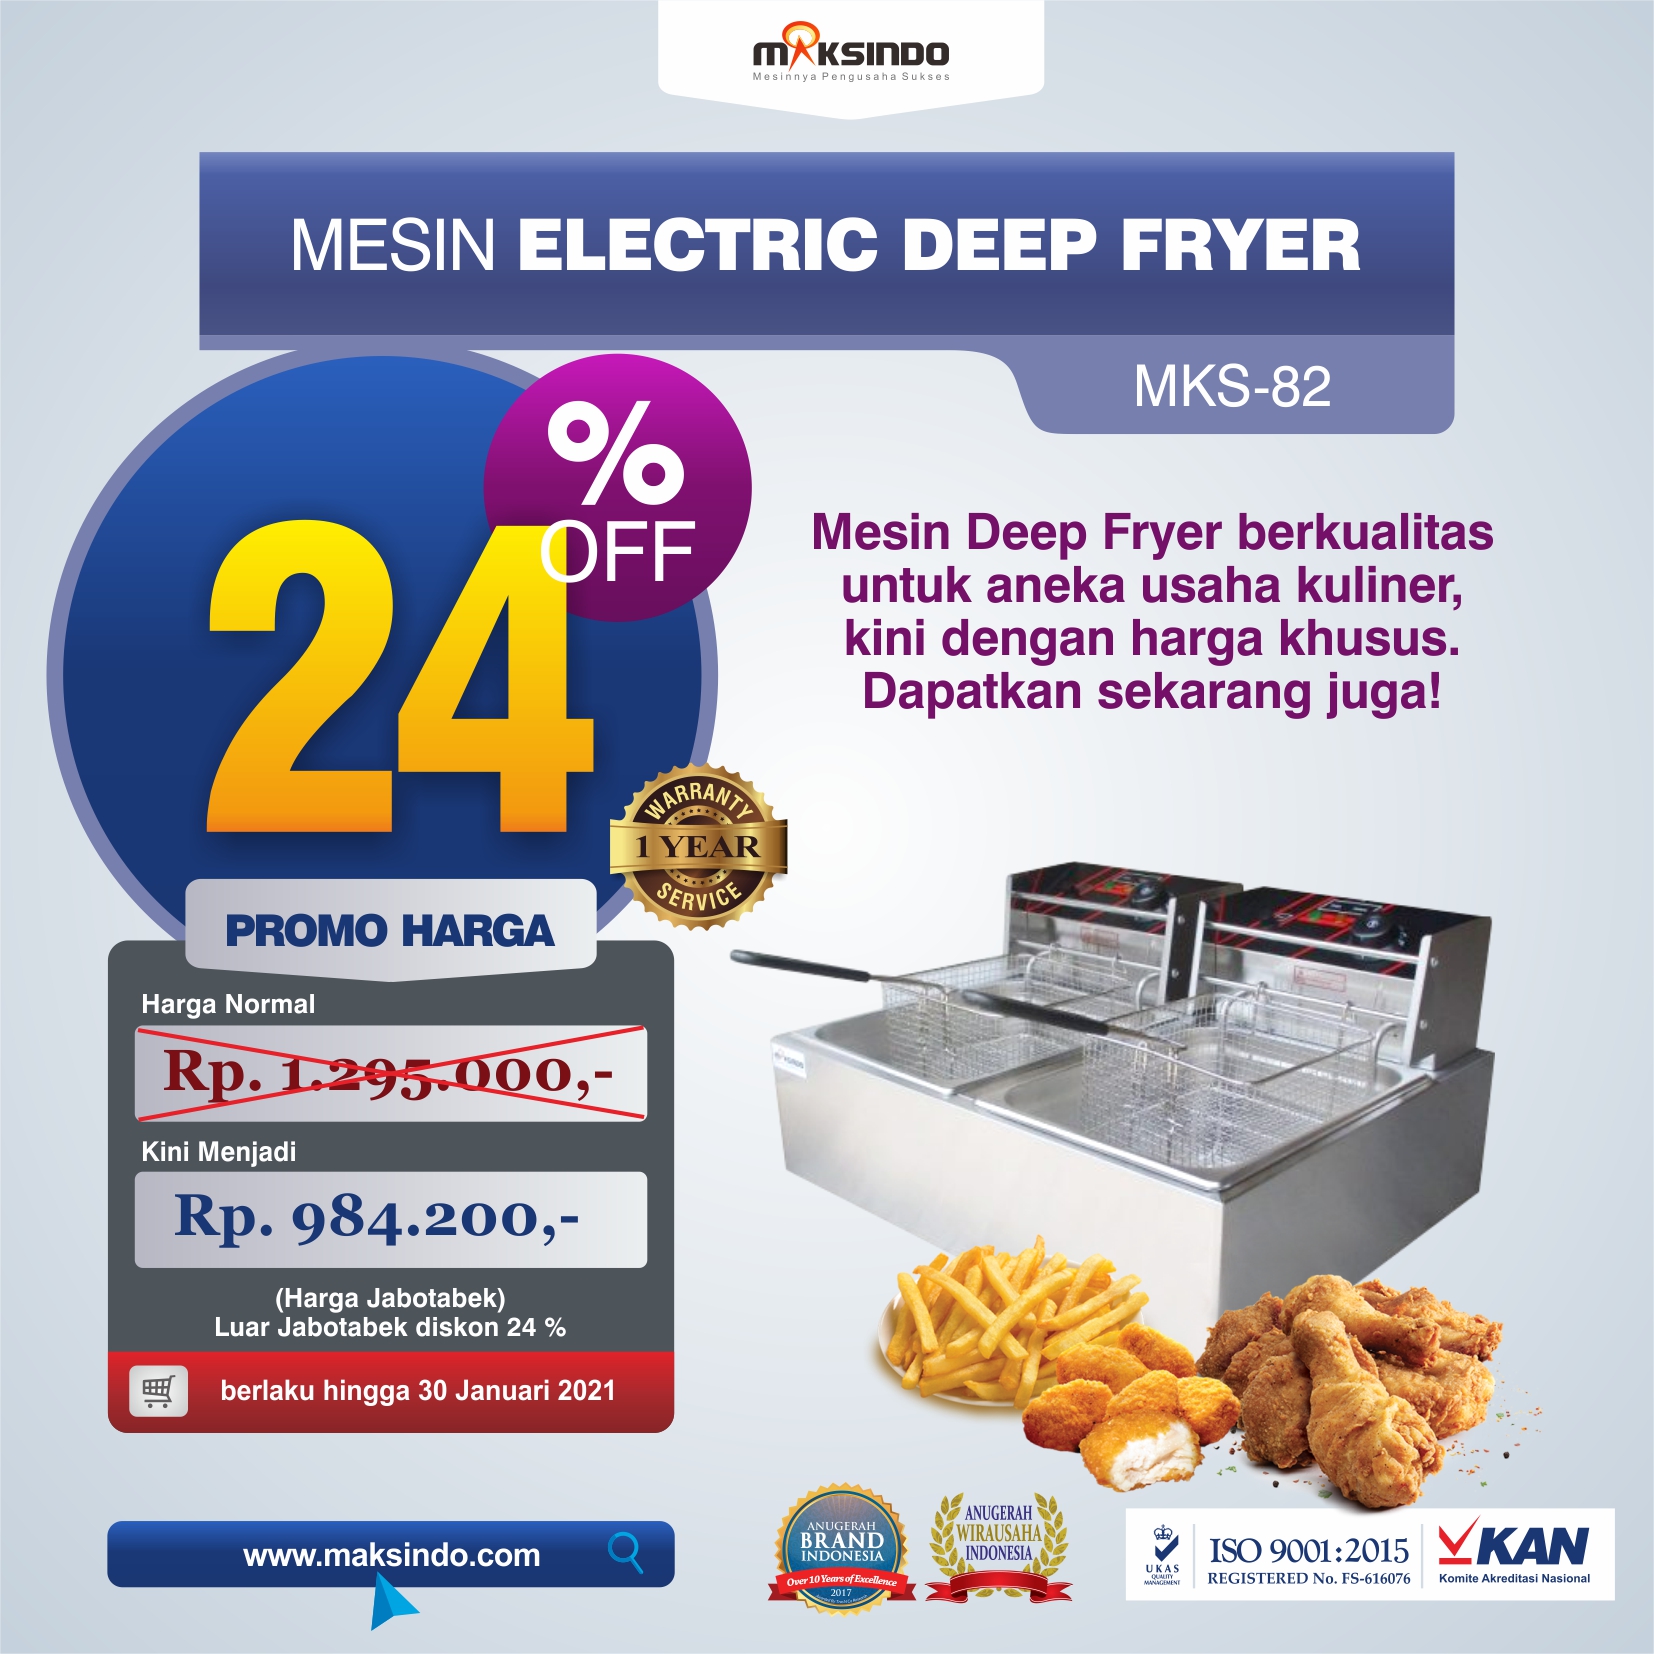 Mesin Electric Deep Fryer MKS-82